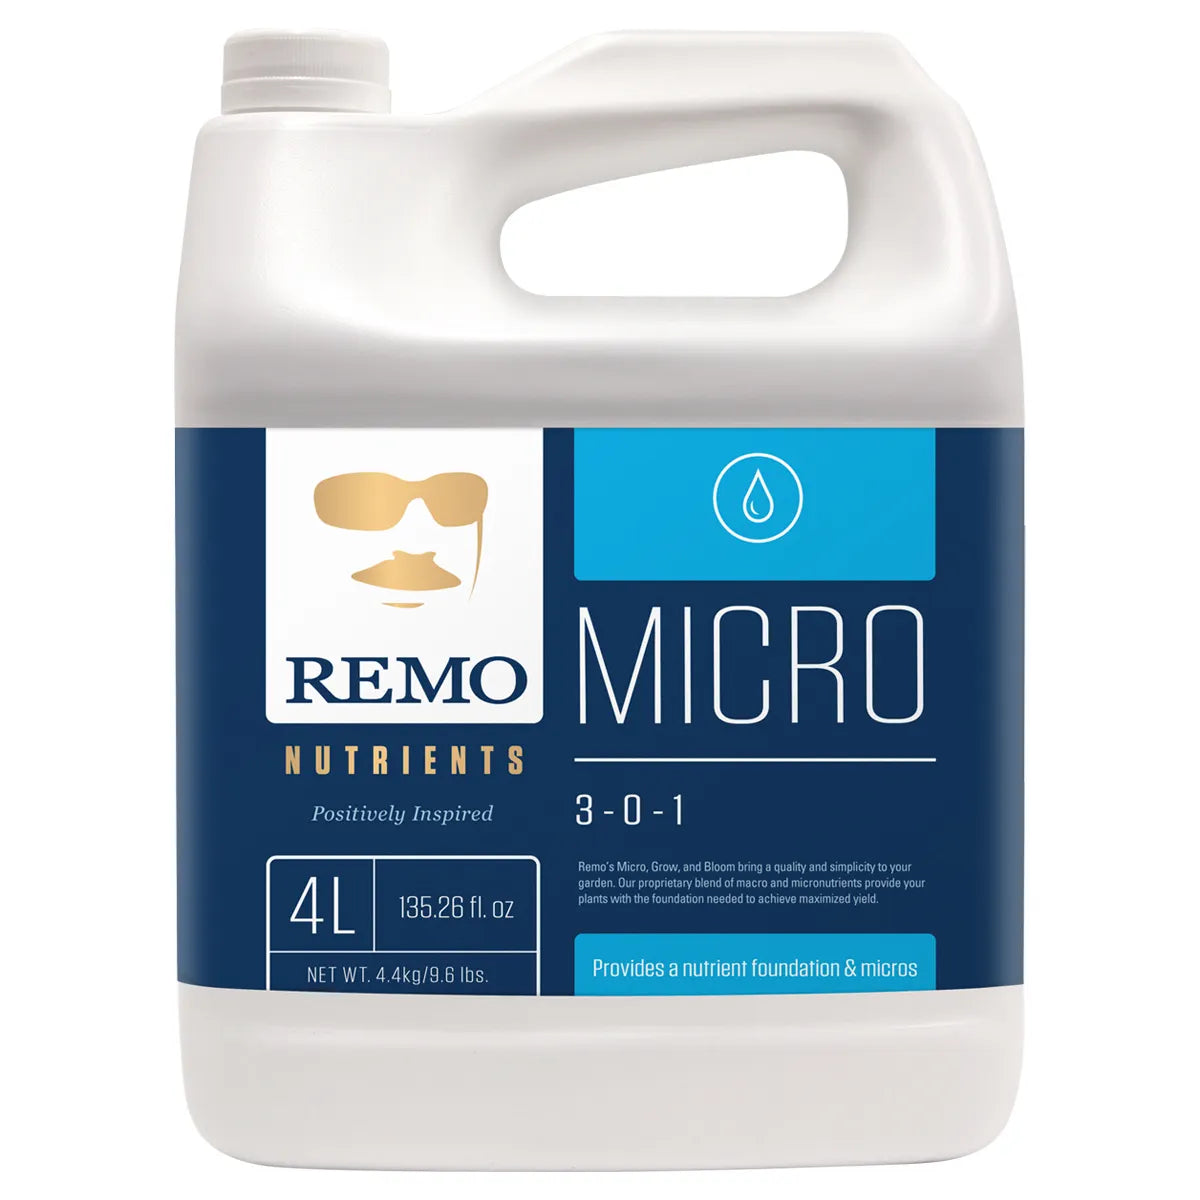 Remo's Nutrients - Micro Nutrient